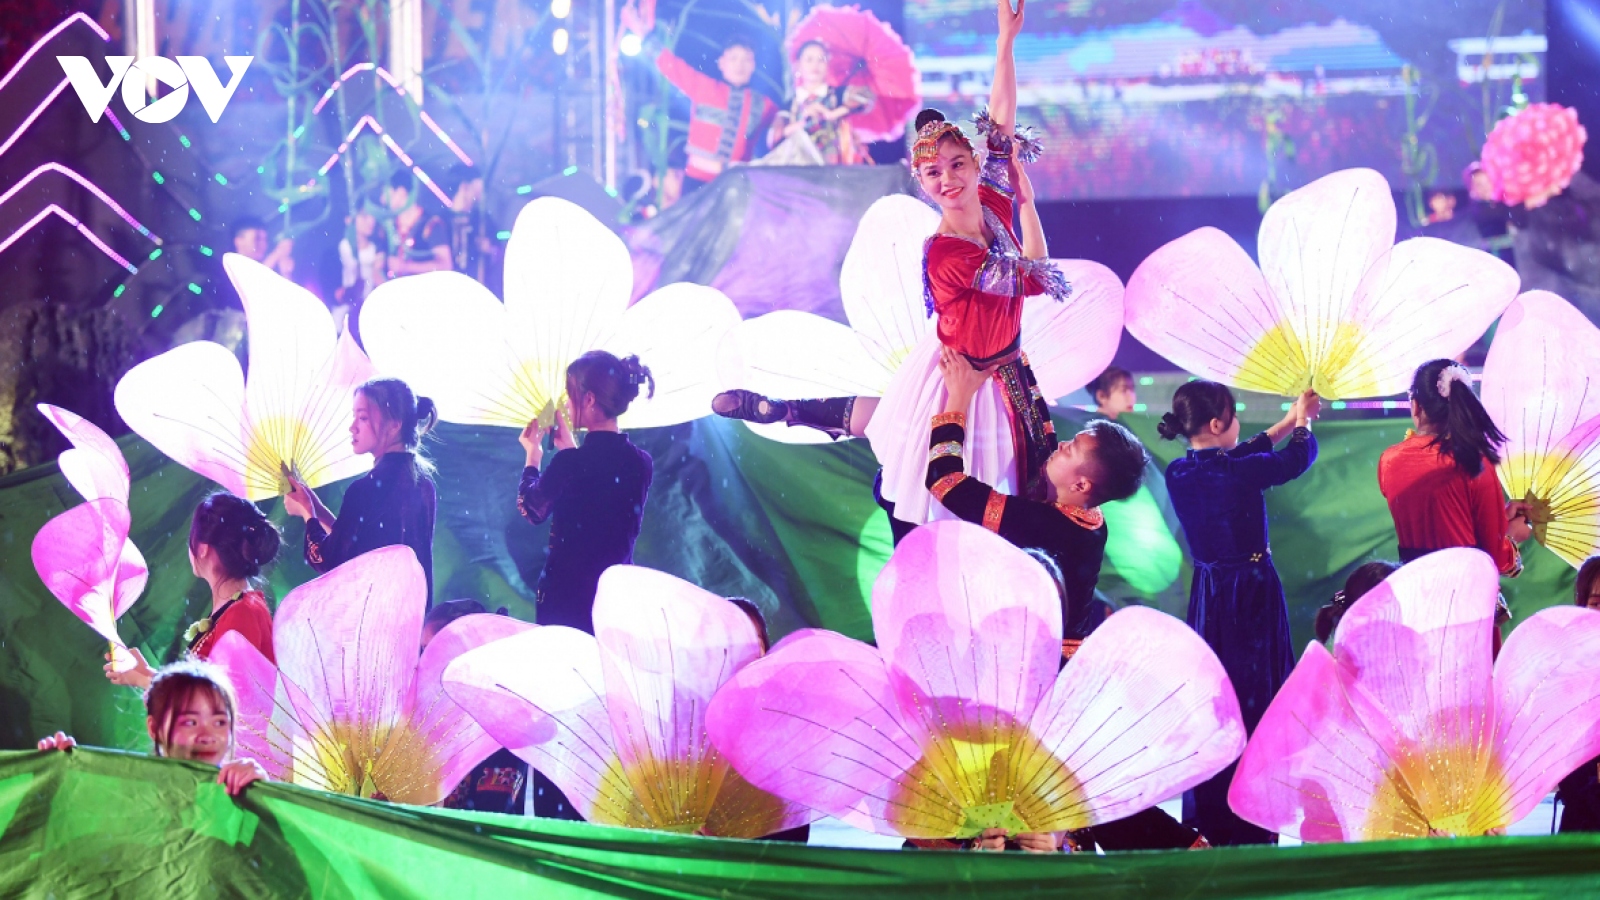 Tam Giac Mach Flower Festival 2020 kicks off in Ha Giang province